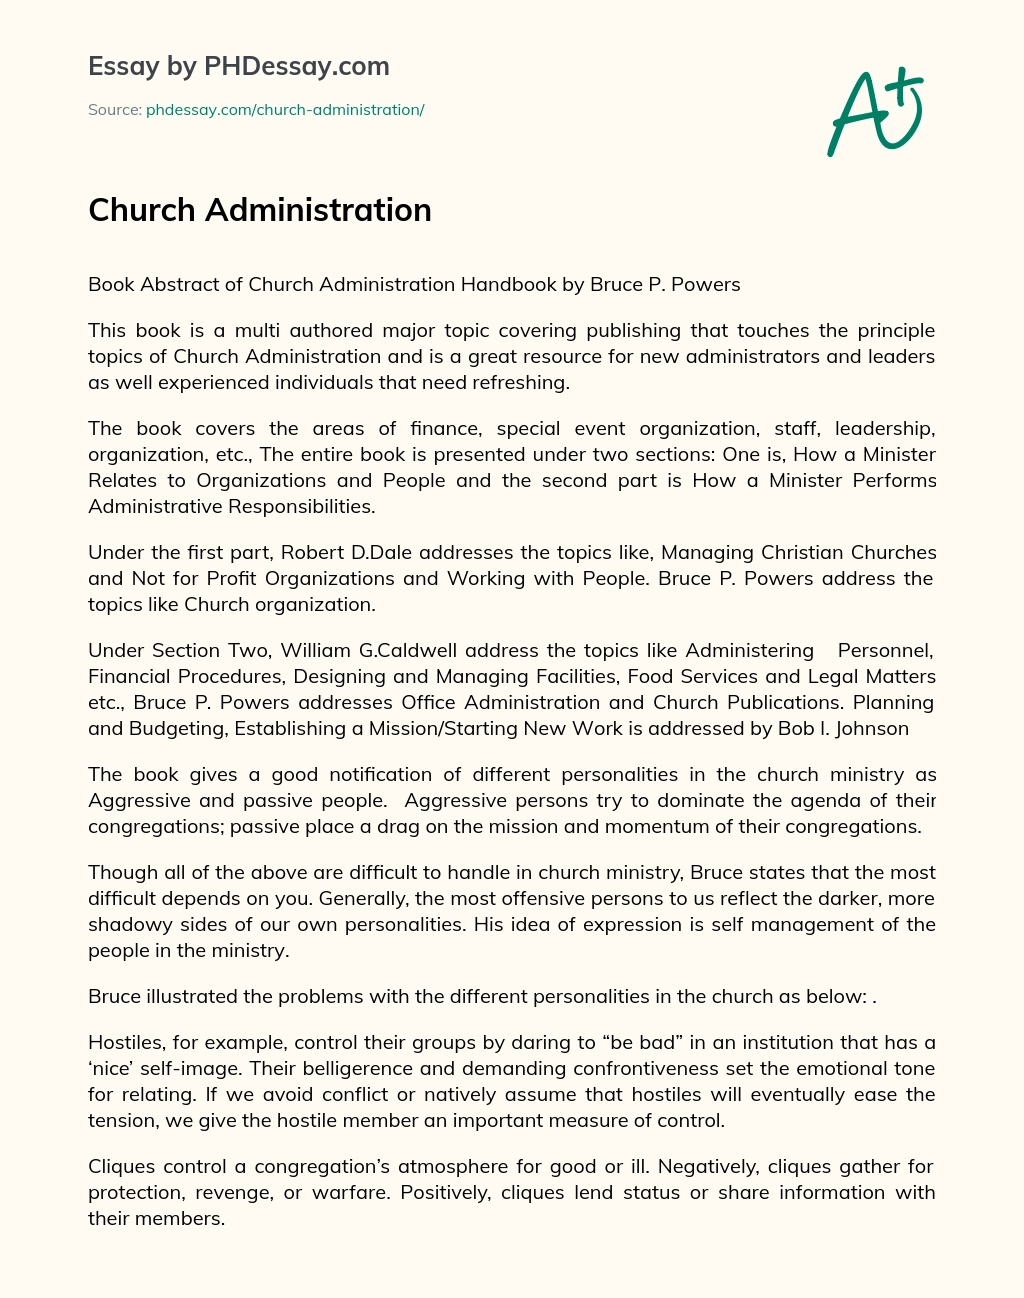 Church Administration essay